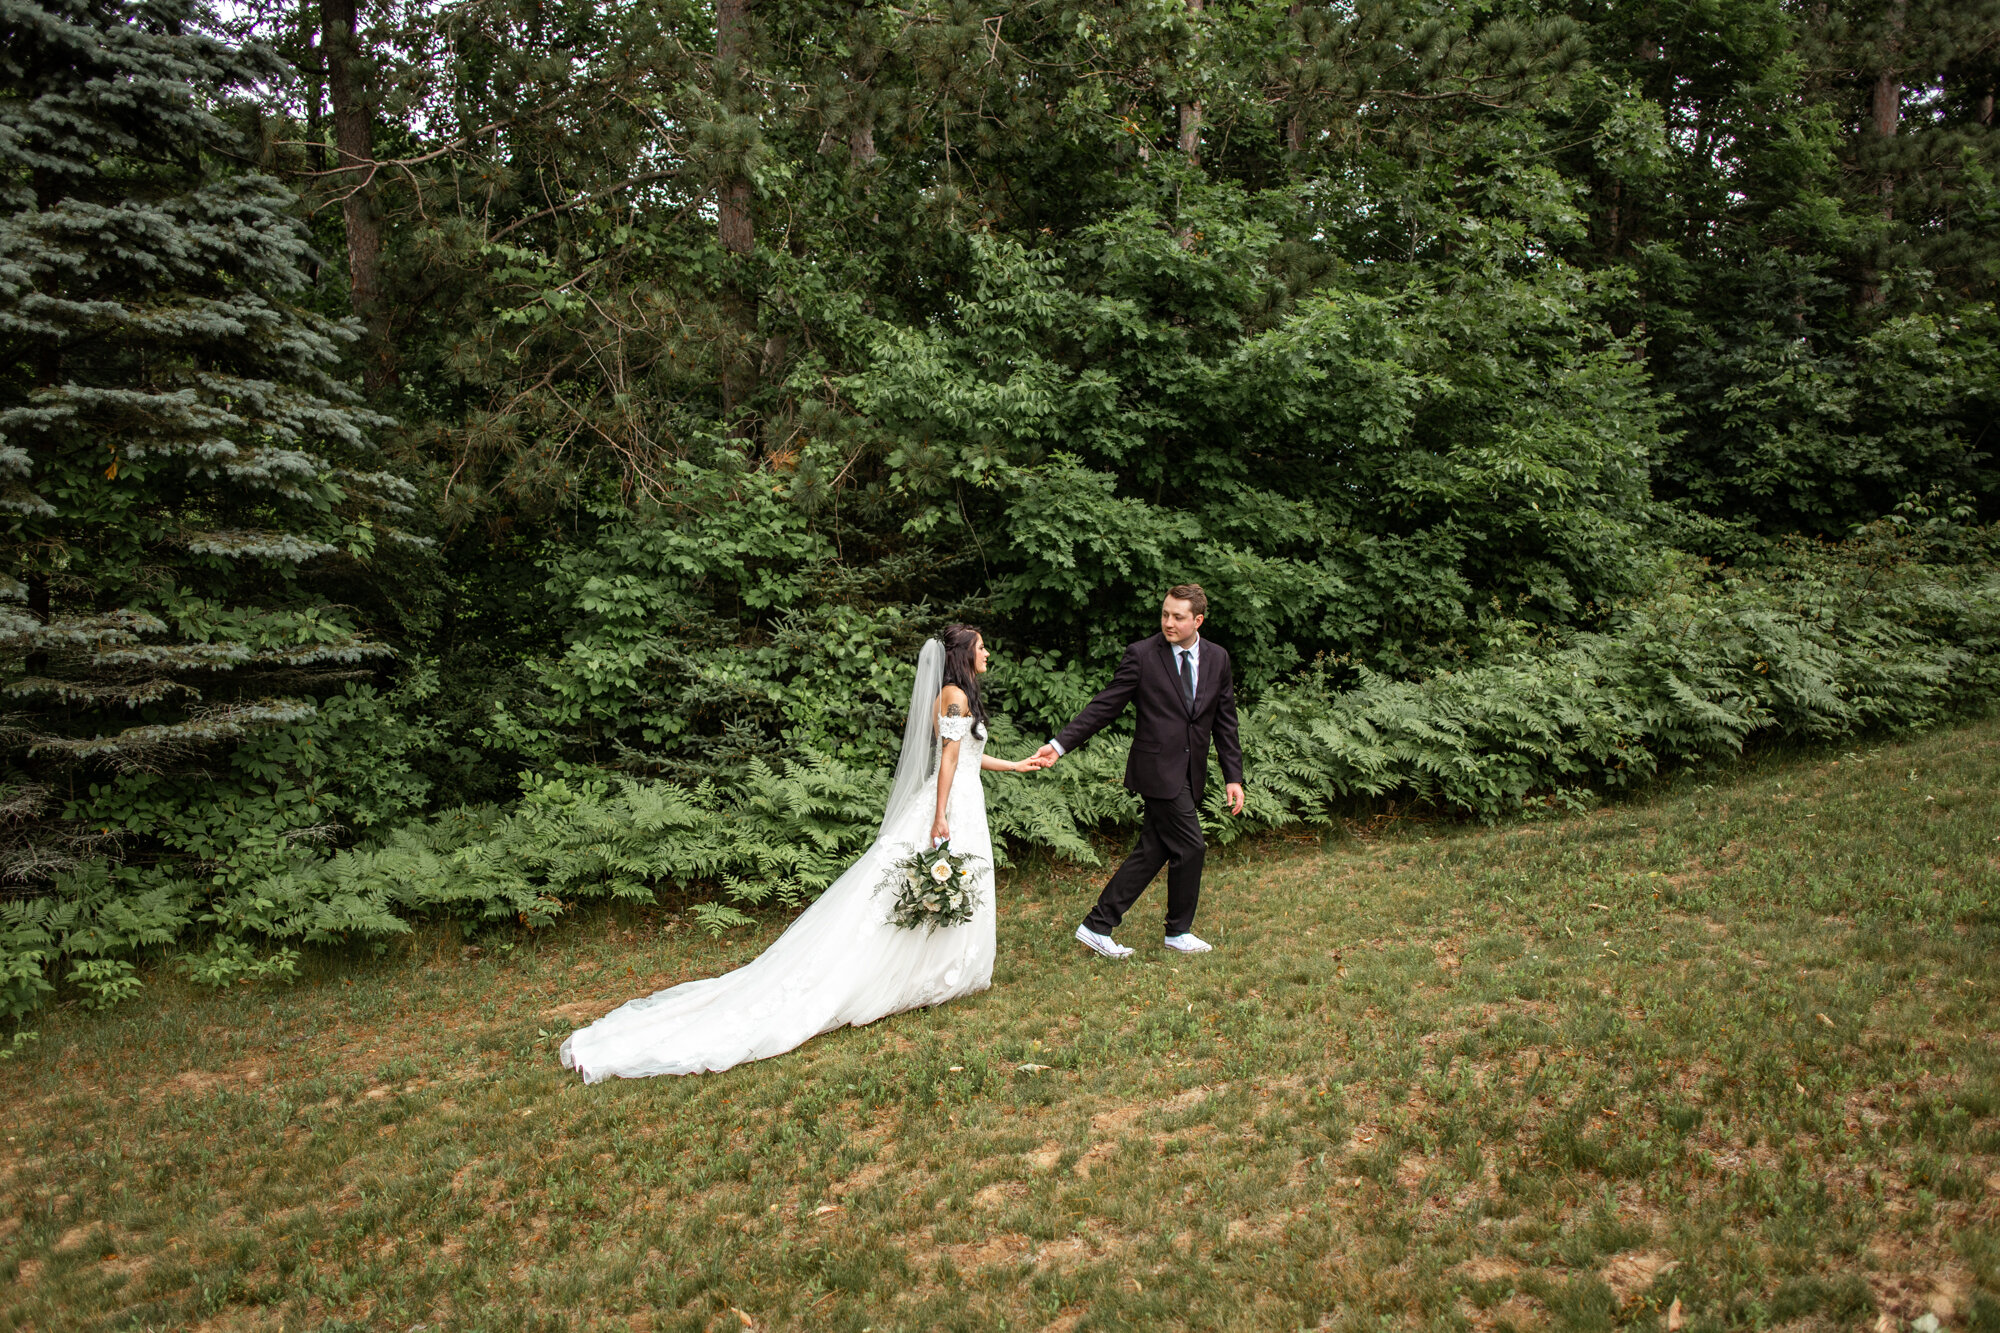 https://images.squarespace-cdn.com/content/v1/5ebf07ad839c884b521e9a8b/1624548937781-F1A7Z7I1F7LU9P8QL0UP/Gable+Hill+Wedding+%7C+Green+Rustic+Barn+Wedding+in+Marcellus%2C+Michigan+%7C+Michigan+Wedding+Photographer+%7C+Michigan+West+Coast+Wedding+%7C+Destination+Wedding+%7C+Green+Wedding+%7C+Sparkler+Exit